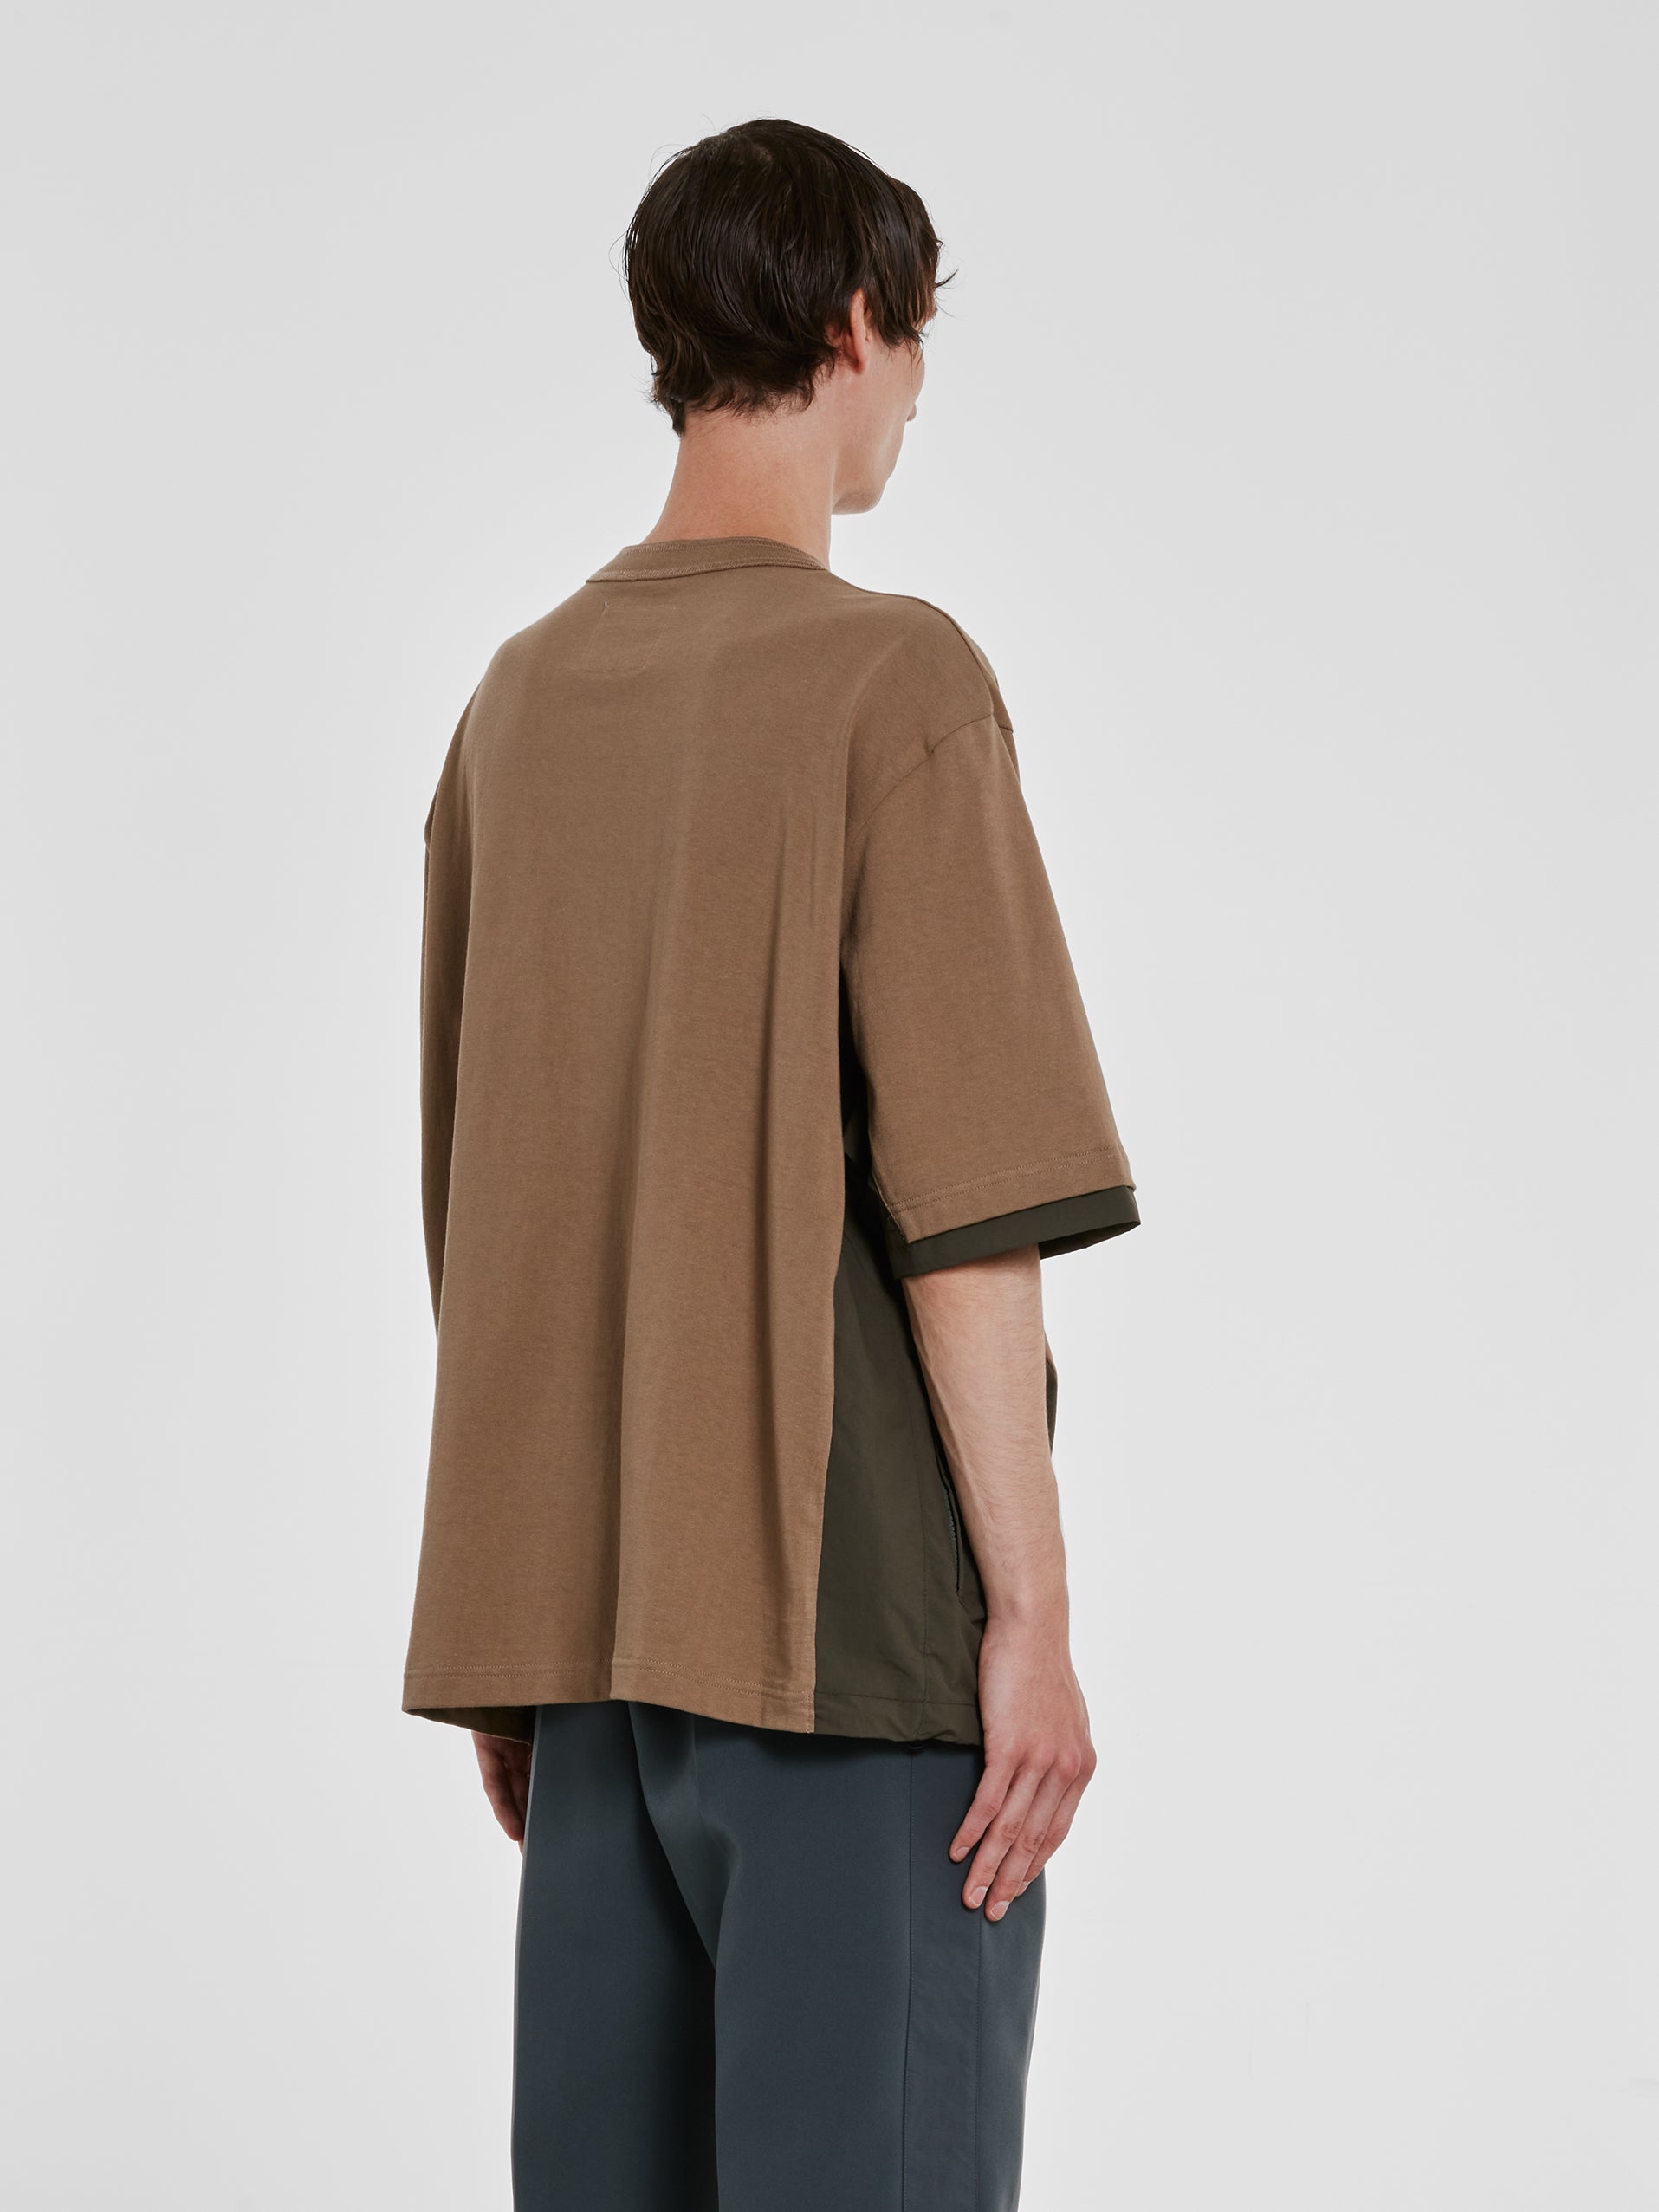 sacai - Men’s Cotton Jersey T-Shirt - (Green) view 3